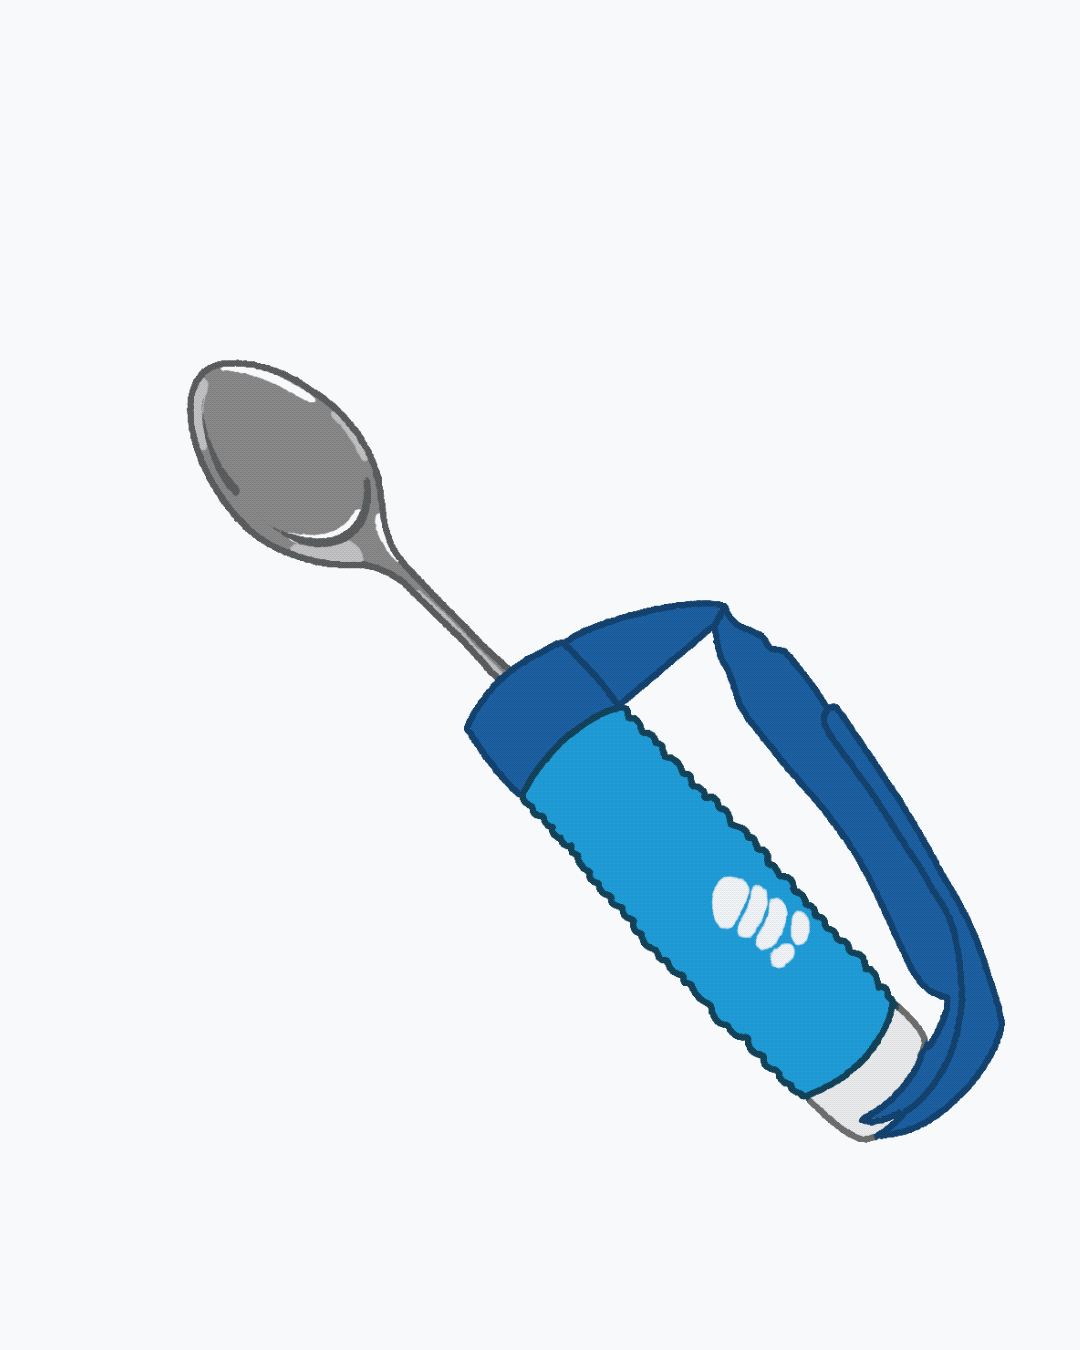 Bendable Cutlery 02